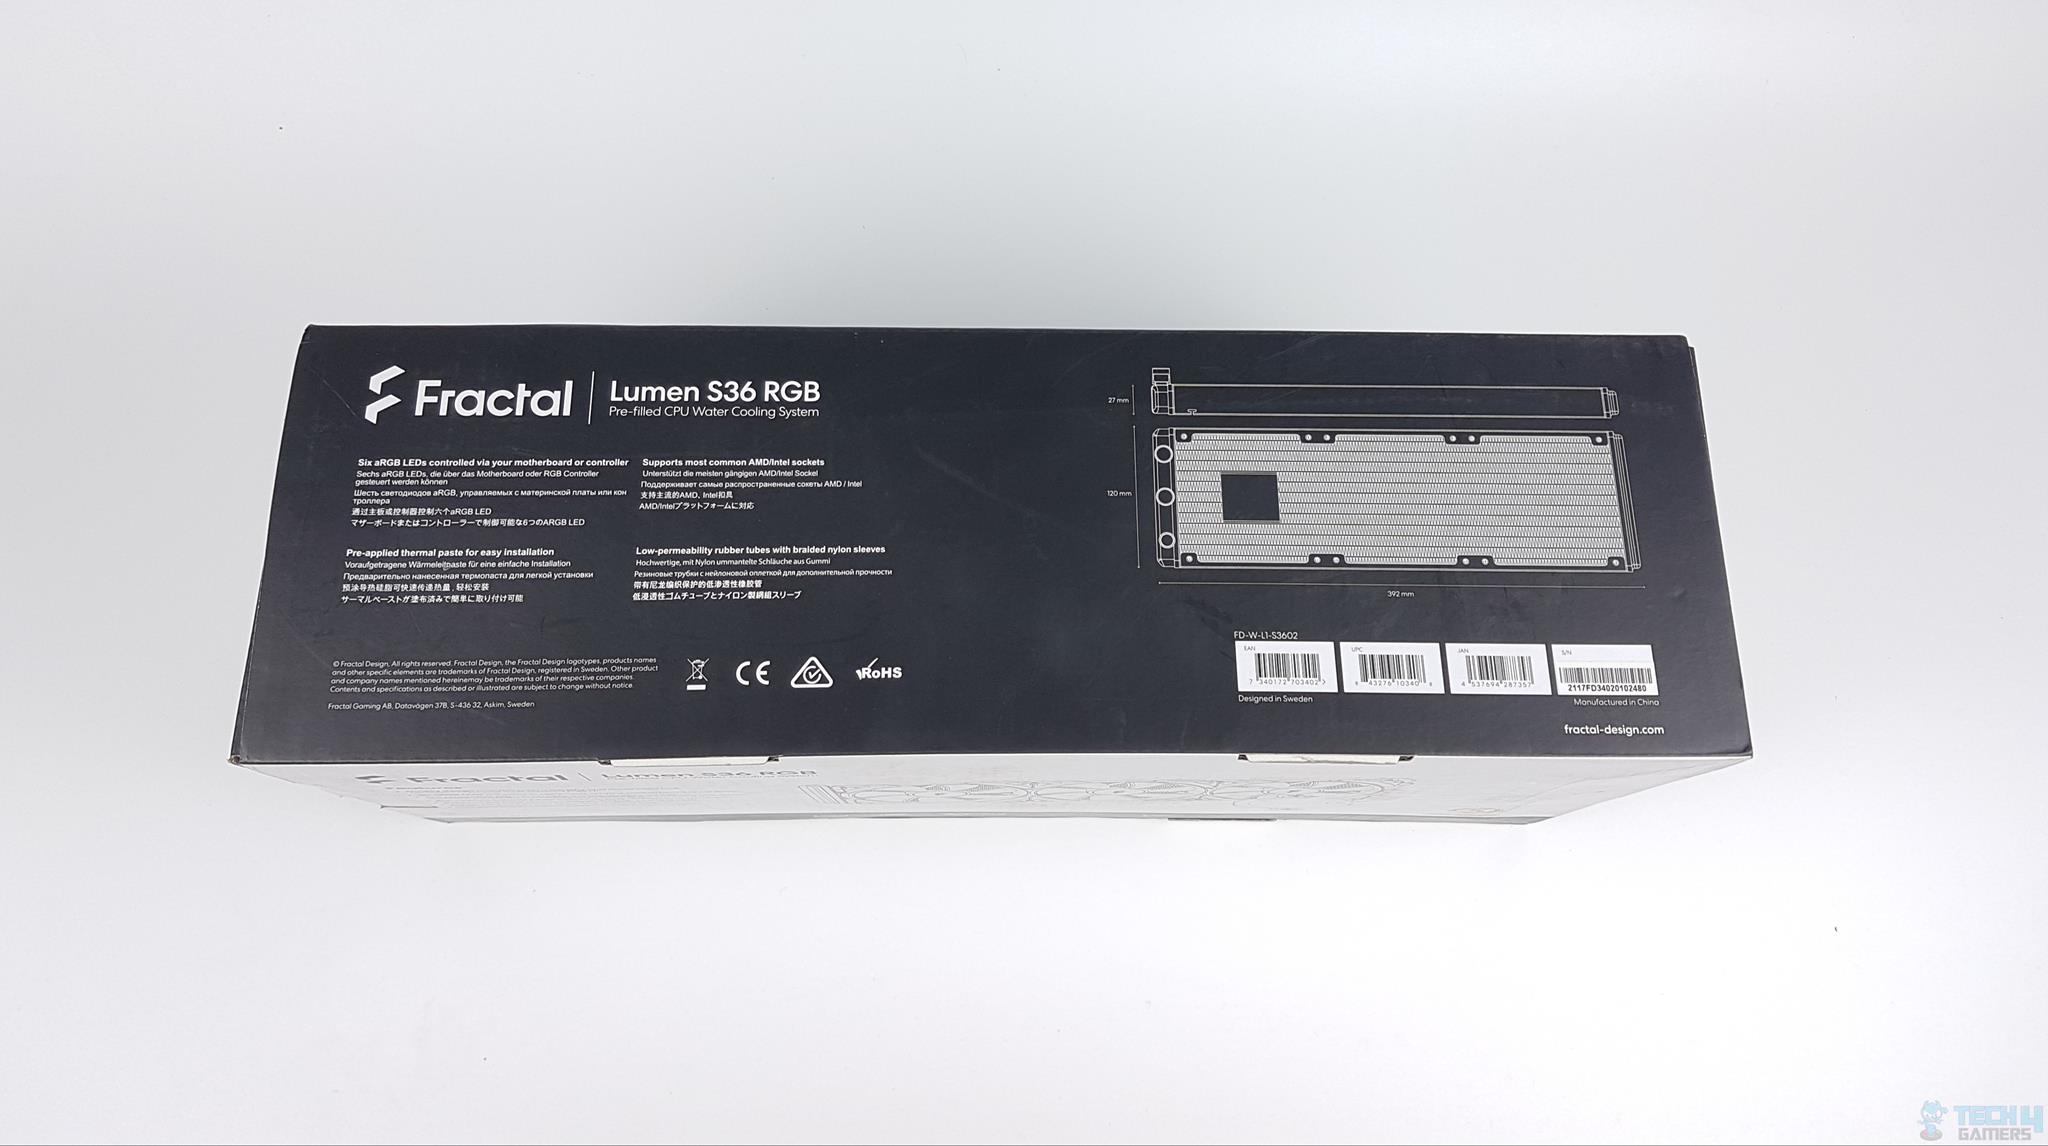 Fractal Design Lumen S36 RGB — The side of the box